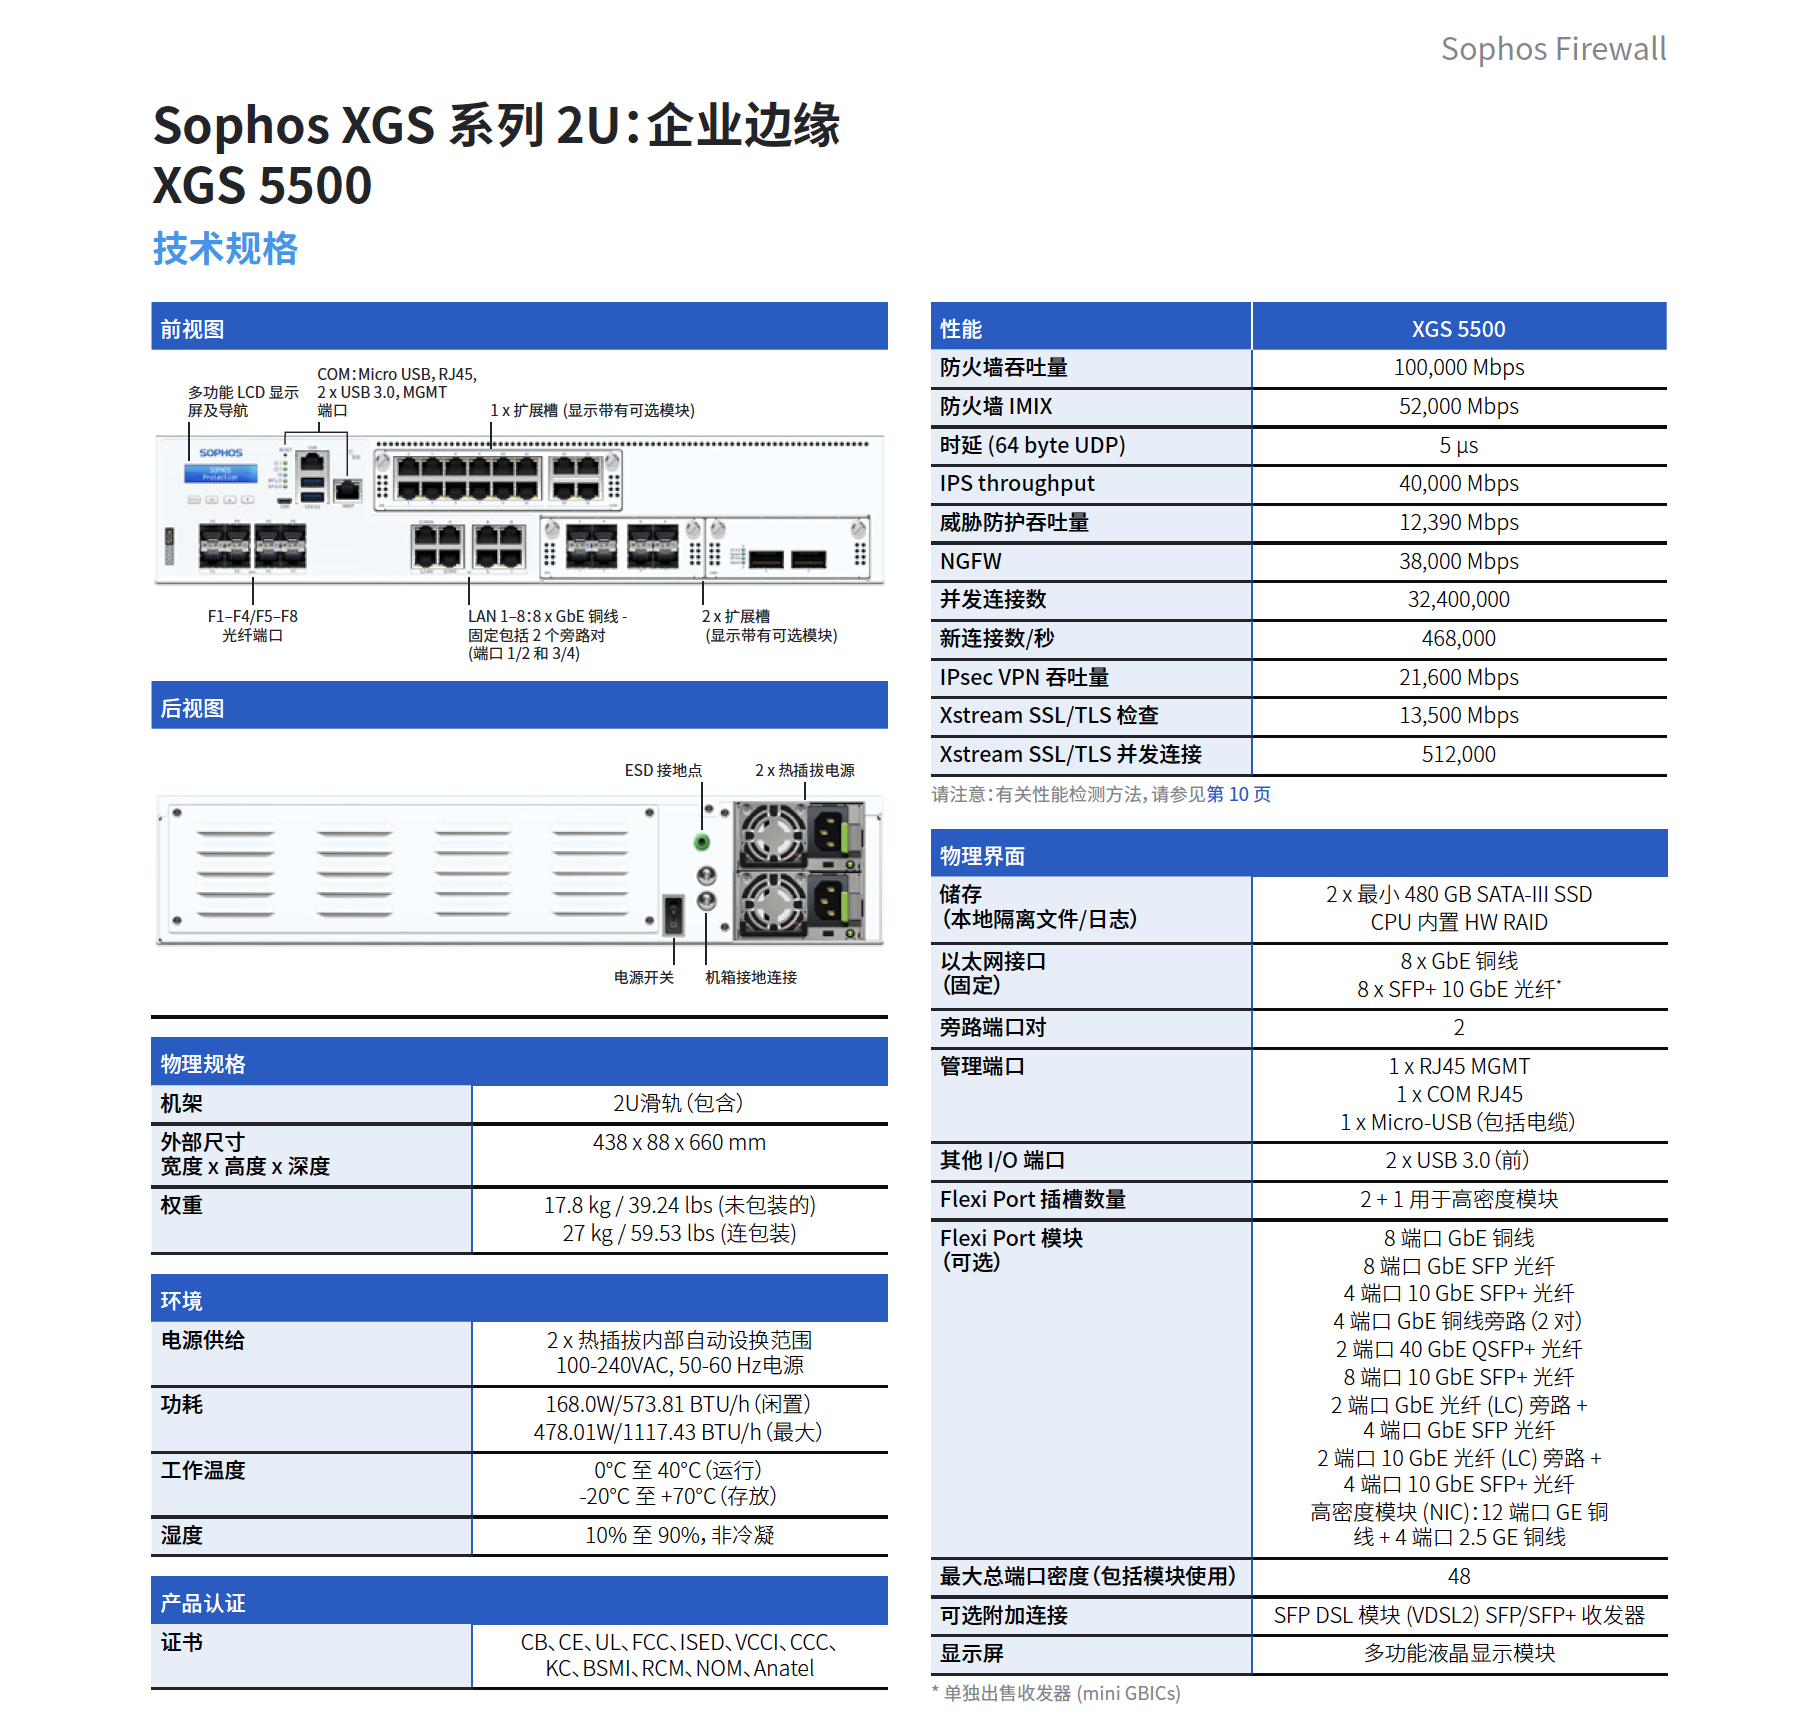 Sophos 5500、Sophos XGS5500、Sophos XGS 5500、Sophos X-NWP5500、Sophos X-WBP5500、Sophos X-ZDP5500 、Sophos X-CORCH5500、Sophos X-EMP5500、Sophos X-WSP5500、Sophos X-ESUP5500、Sophos 6500、Sophos XGS6500、Sophos XGS 6500、Sophos X-NWP6500、Sophos X-WBP6500、Sophos X-ZDP6500 、Sophos X-CORCH6500、Sophos X-EMP6500、Sophos X-WSP6500、Sophos X-ESUP6500、